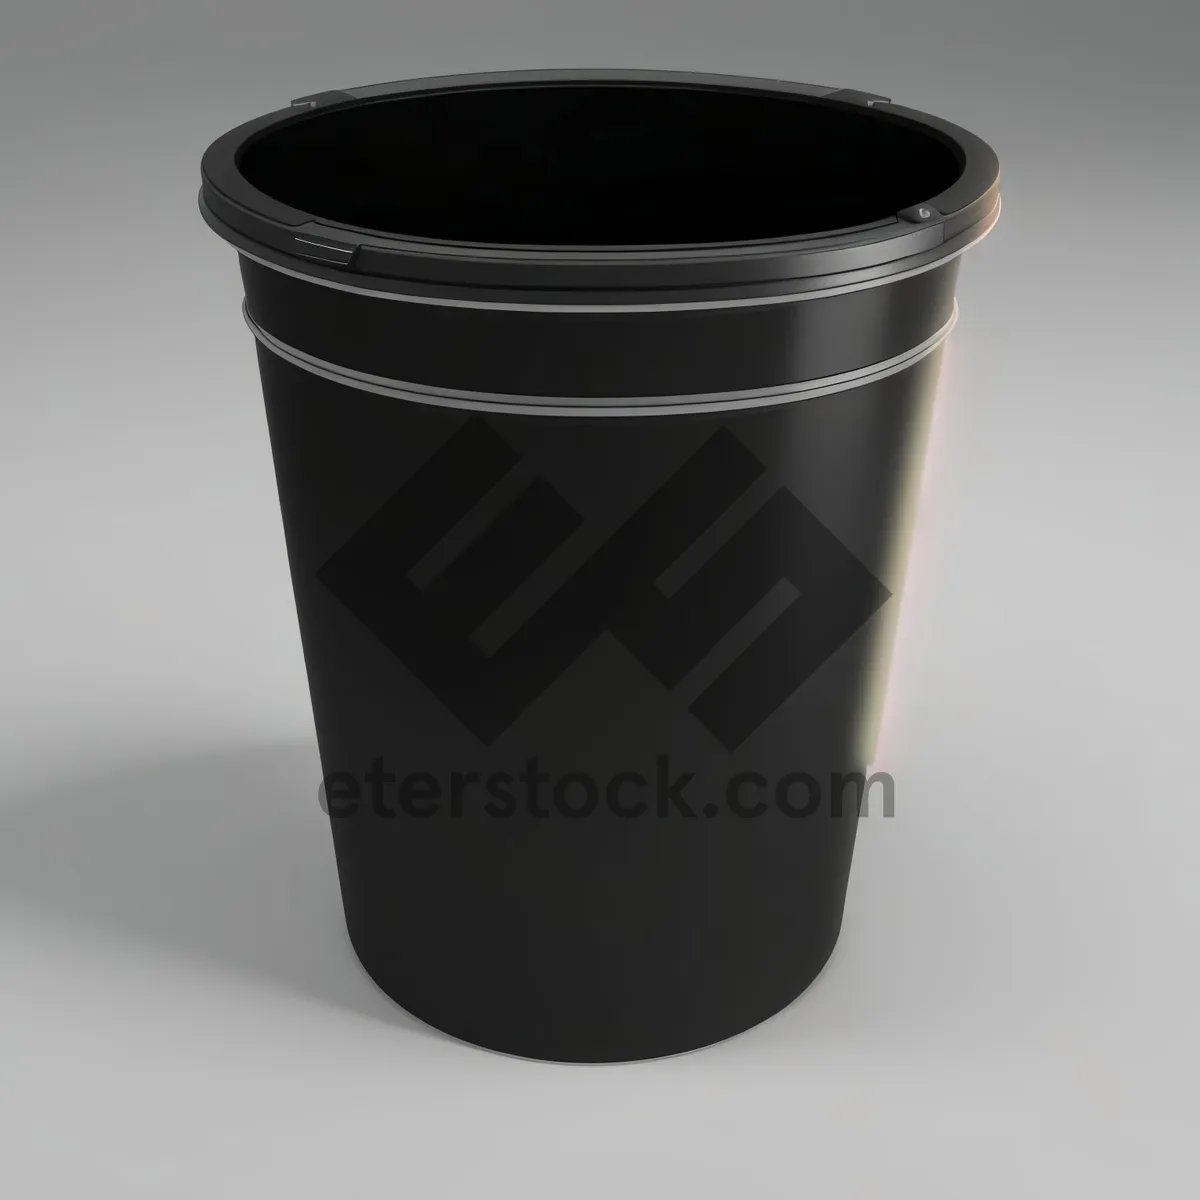 Picture of Tea-filled Ceramic Mug on Table.